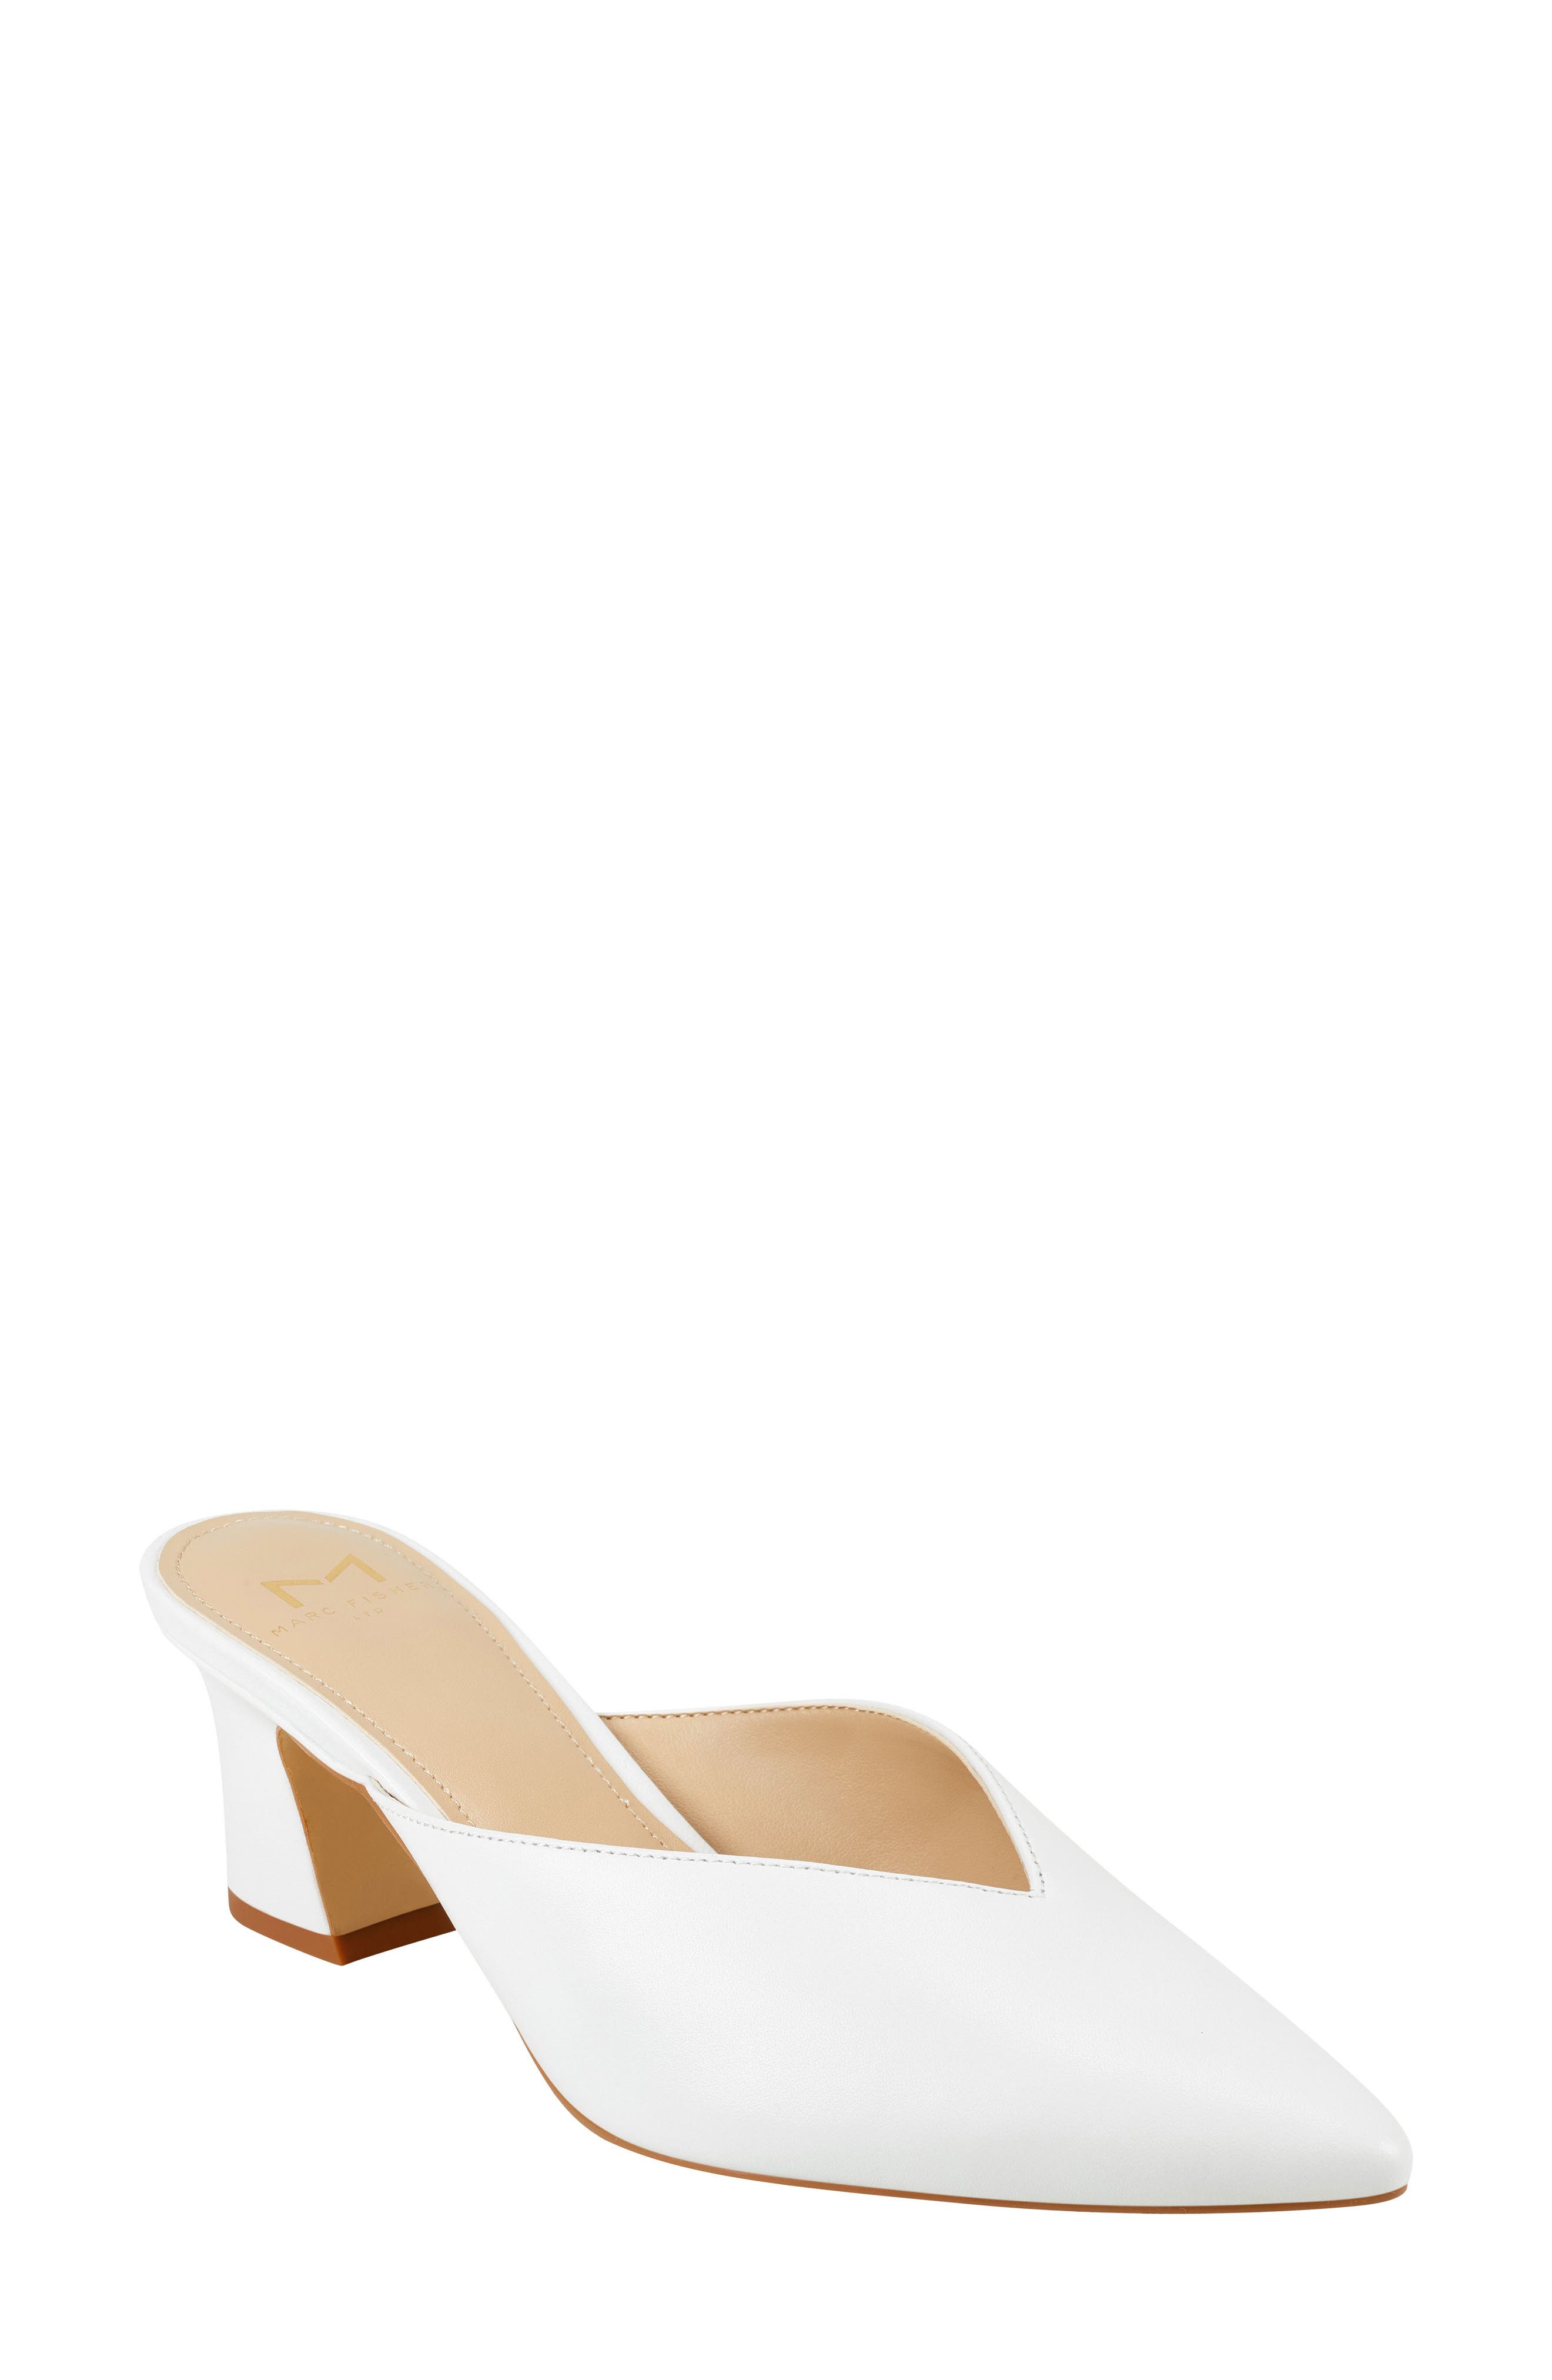 white heels sale